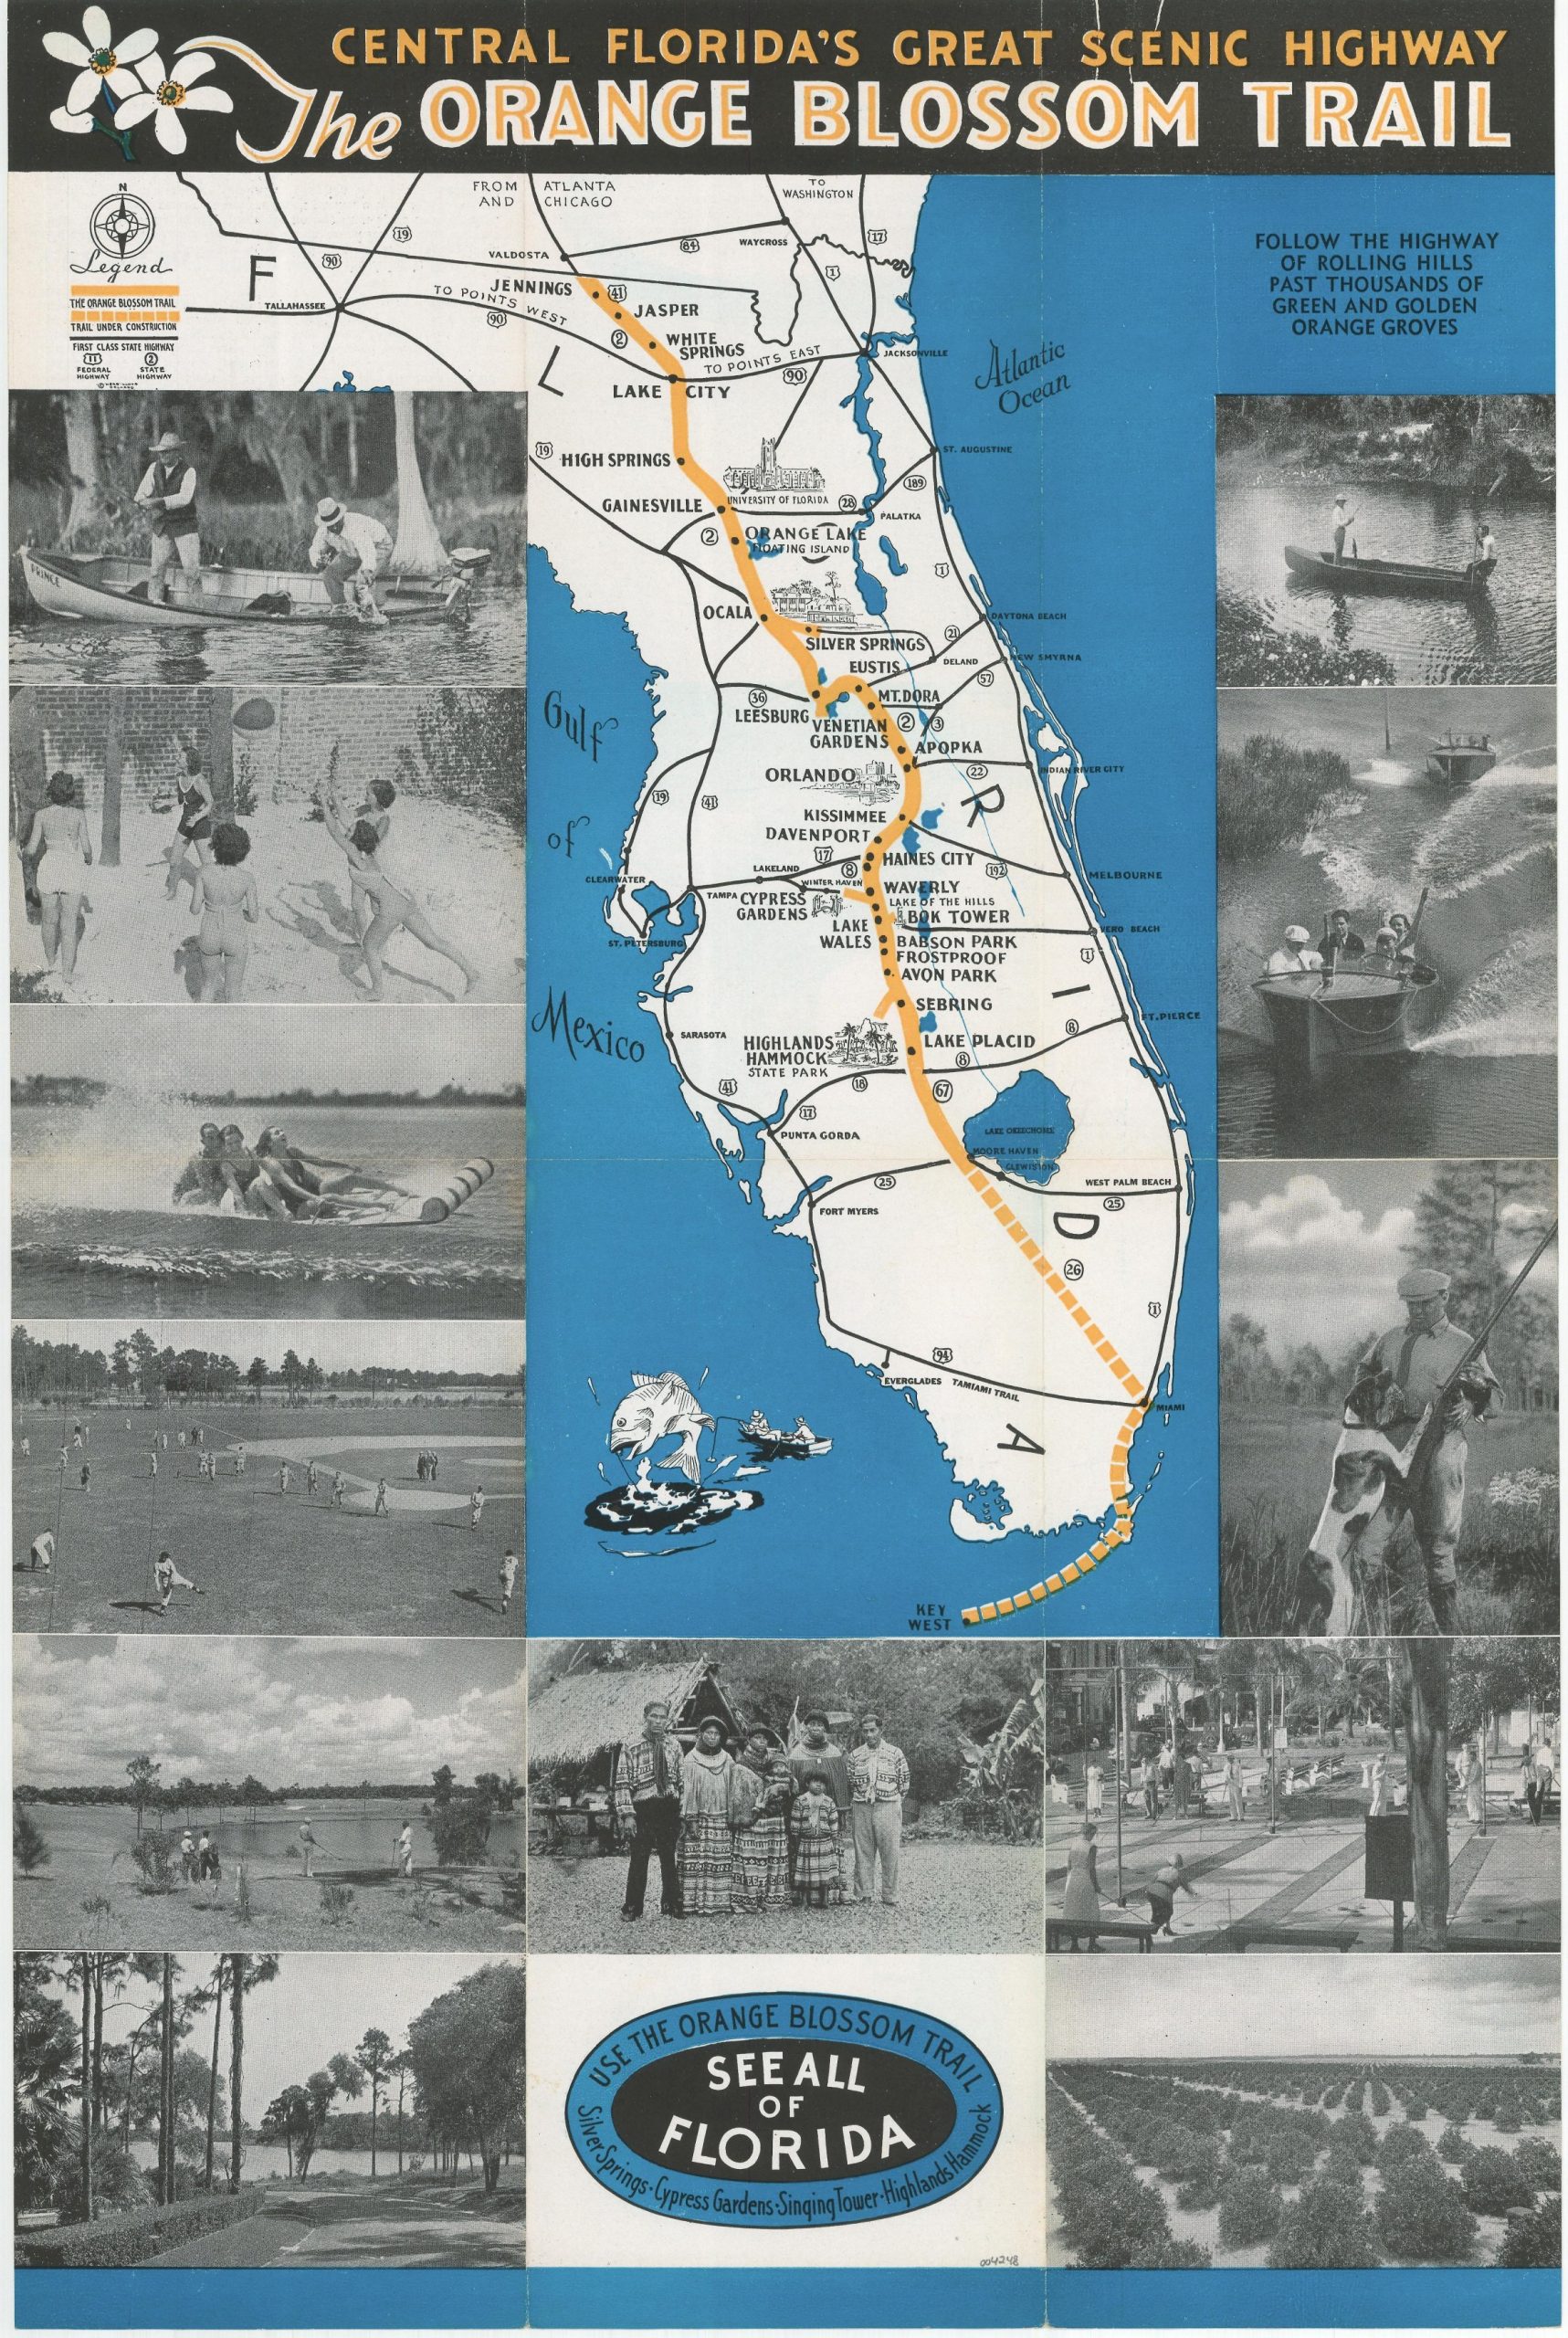 ORLANDO,FLORIDA-GARY'S DUCK INN-3974 S.ORANGE BLOSSOM TRAIL